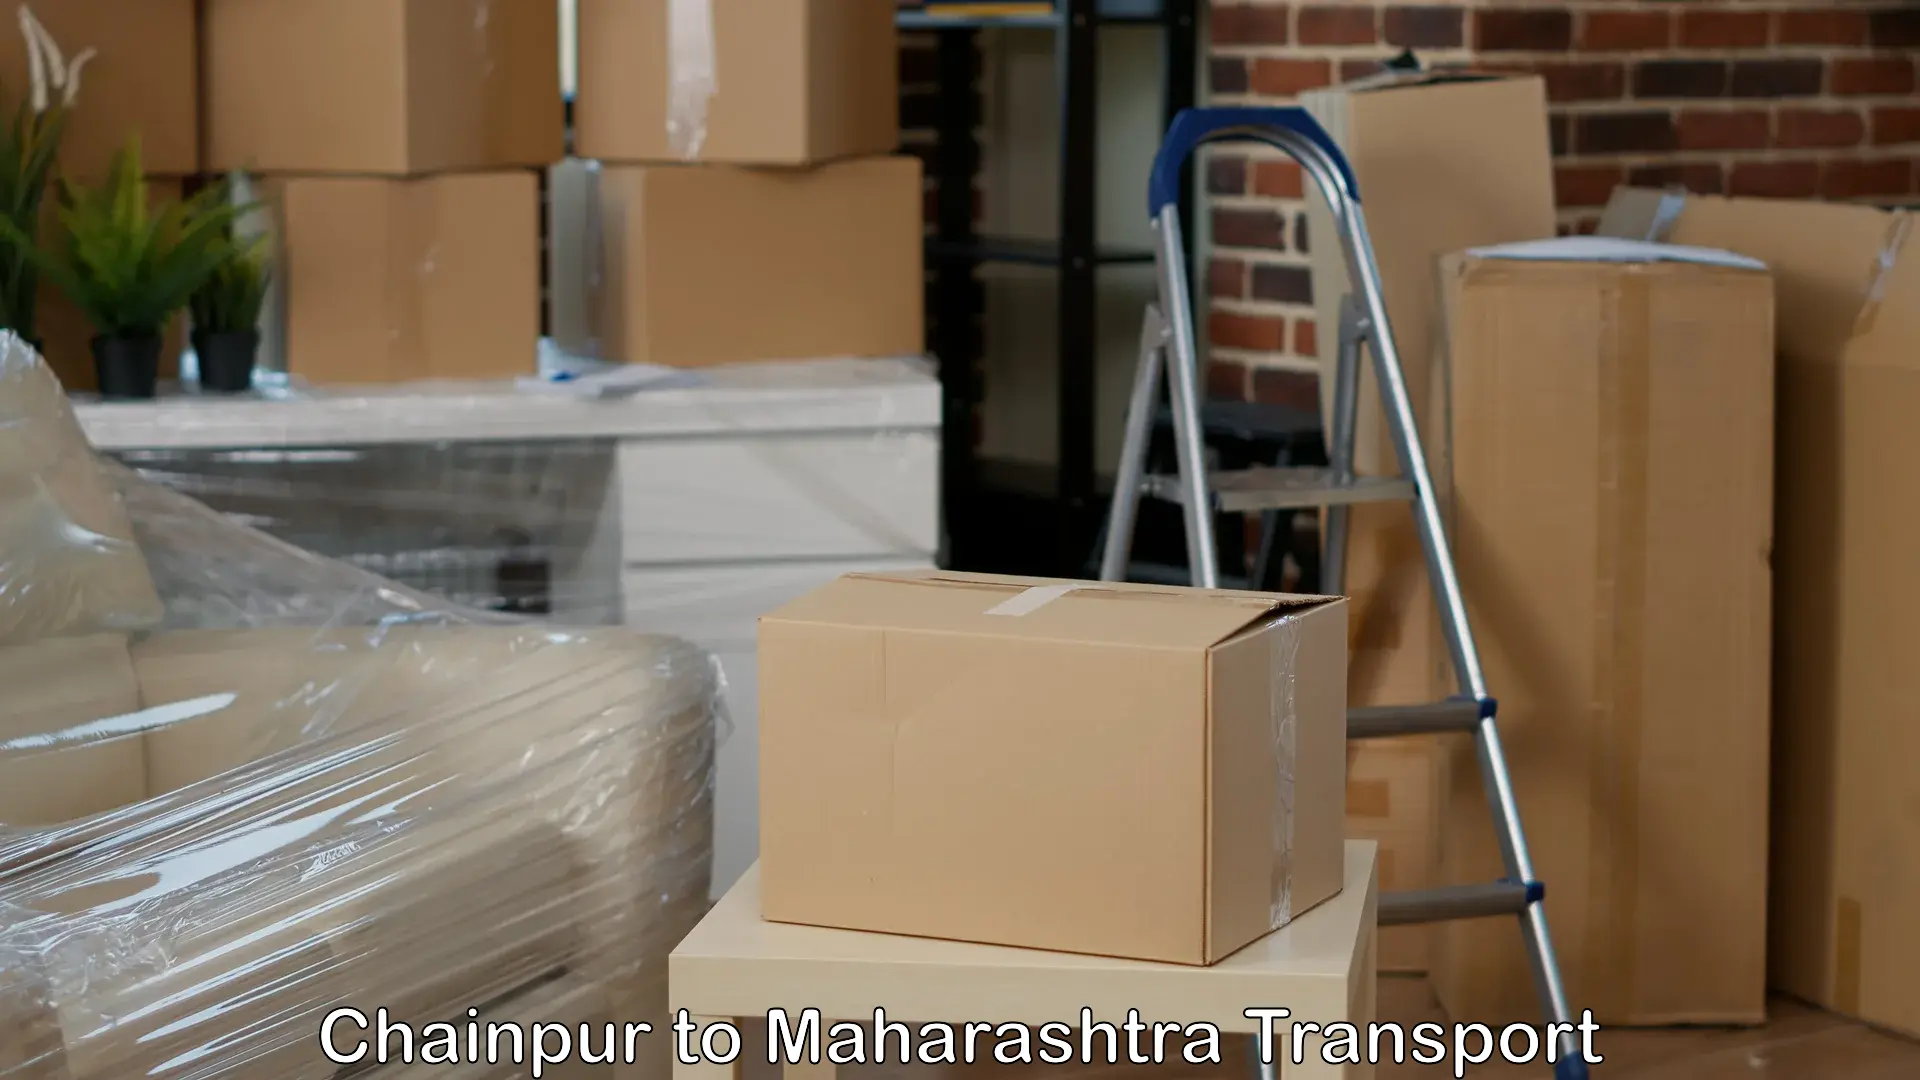 Shipping partner Chainpur to Bhokar